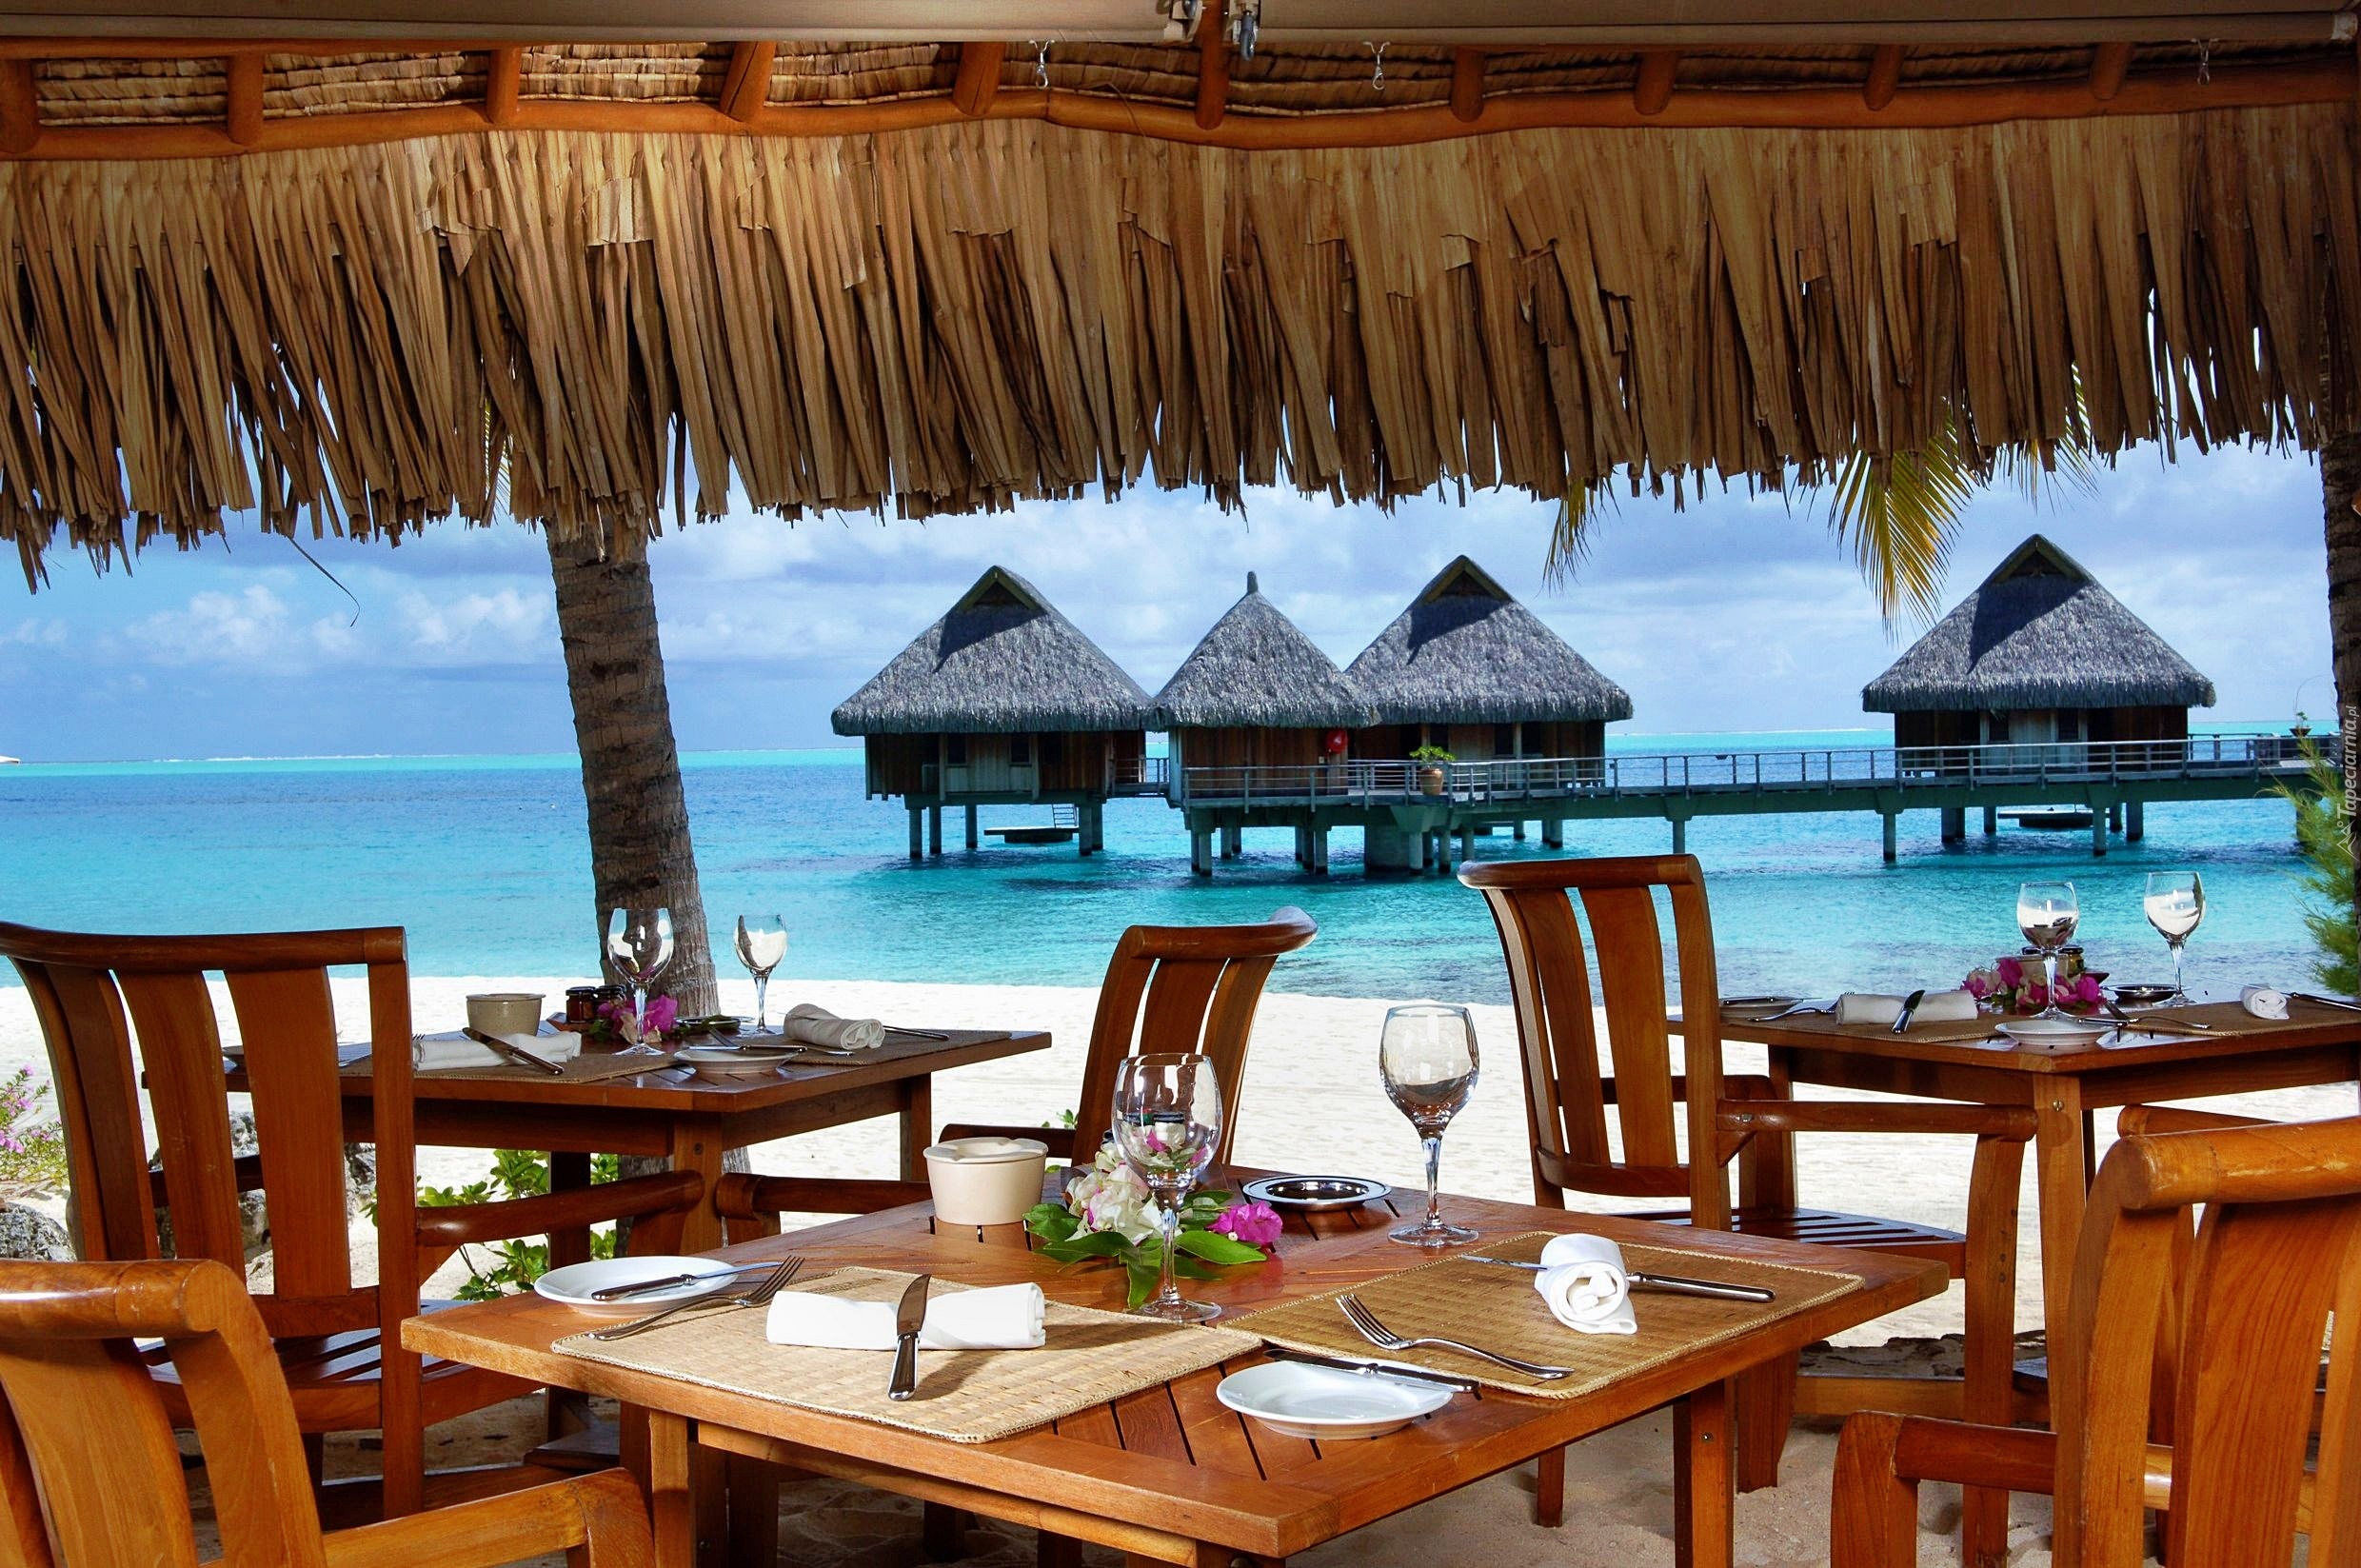 Restauracja, Plaża, Ocean, Bora Bora